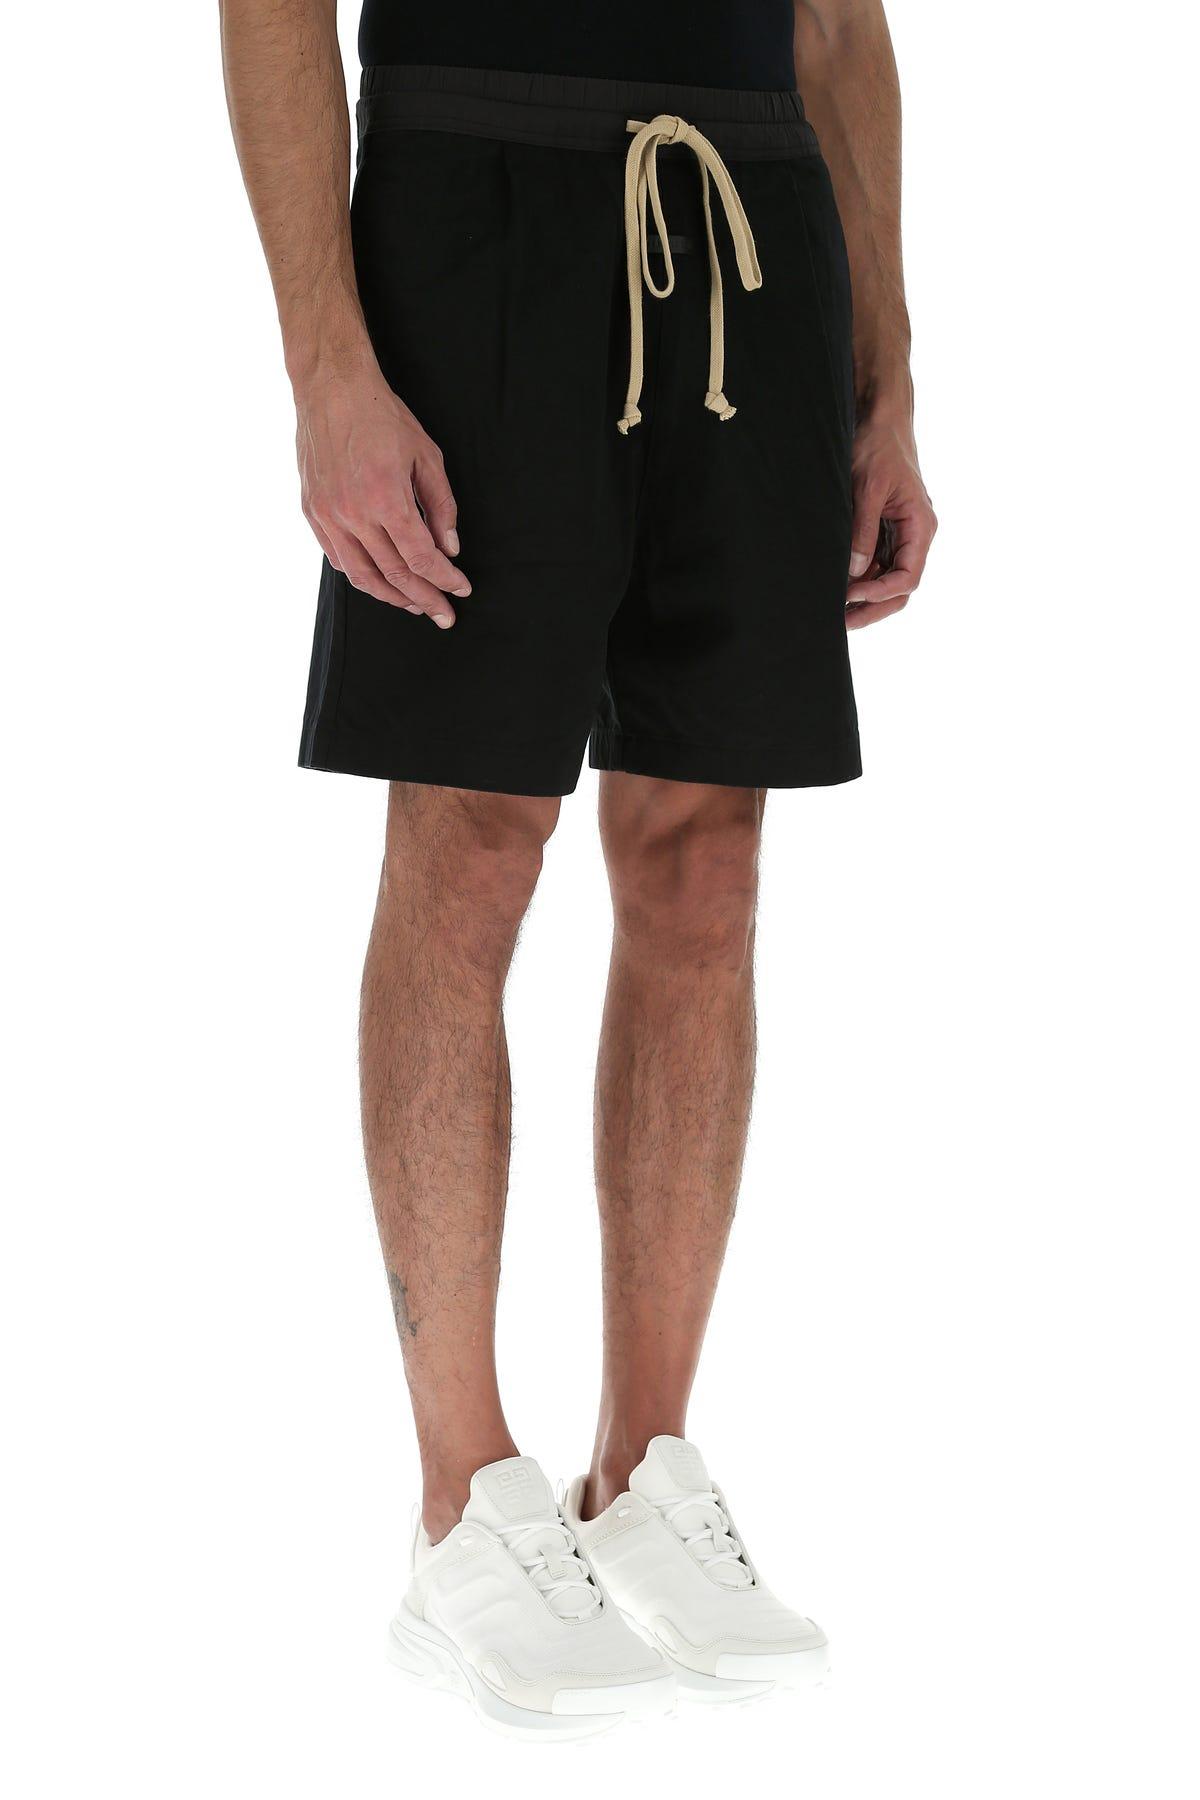 Fear Of God Black Cotton Bermuda Shorts for Men - Lyst